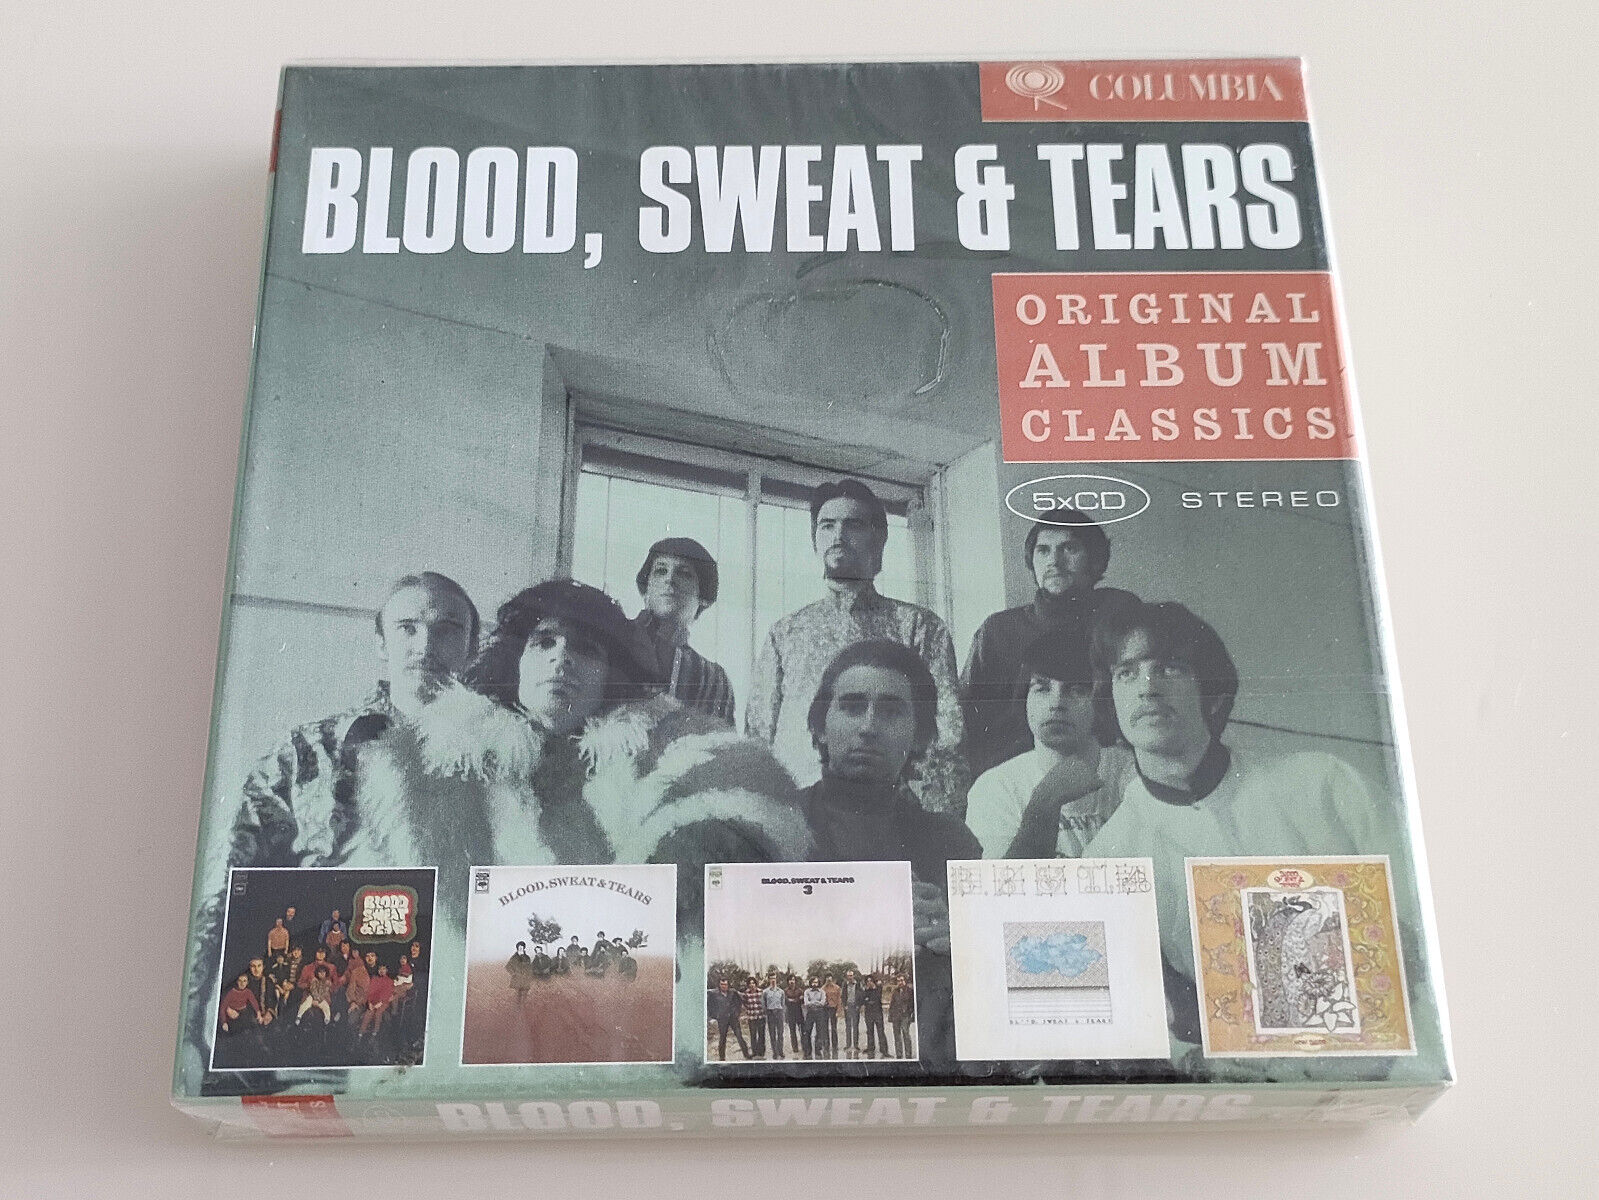 Original Album Classics, Vol. 1 by Blood, Sweat & Tears 5CD Box EU Edition